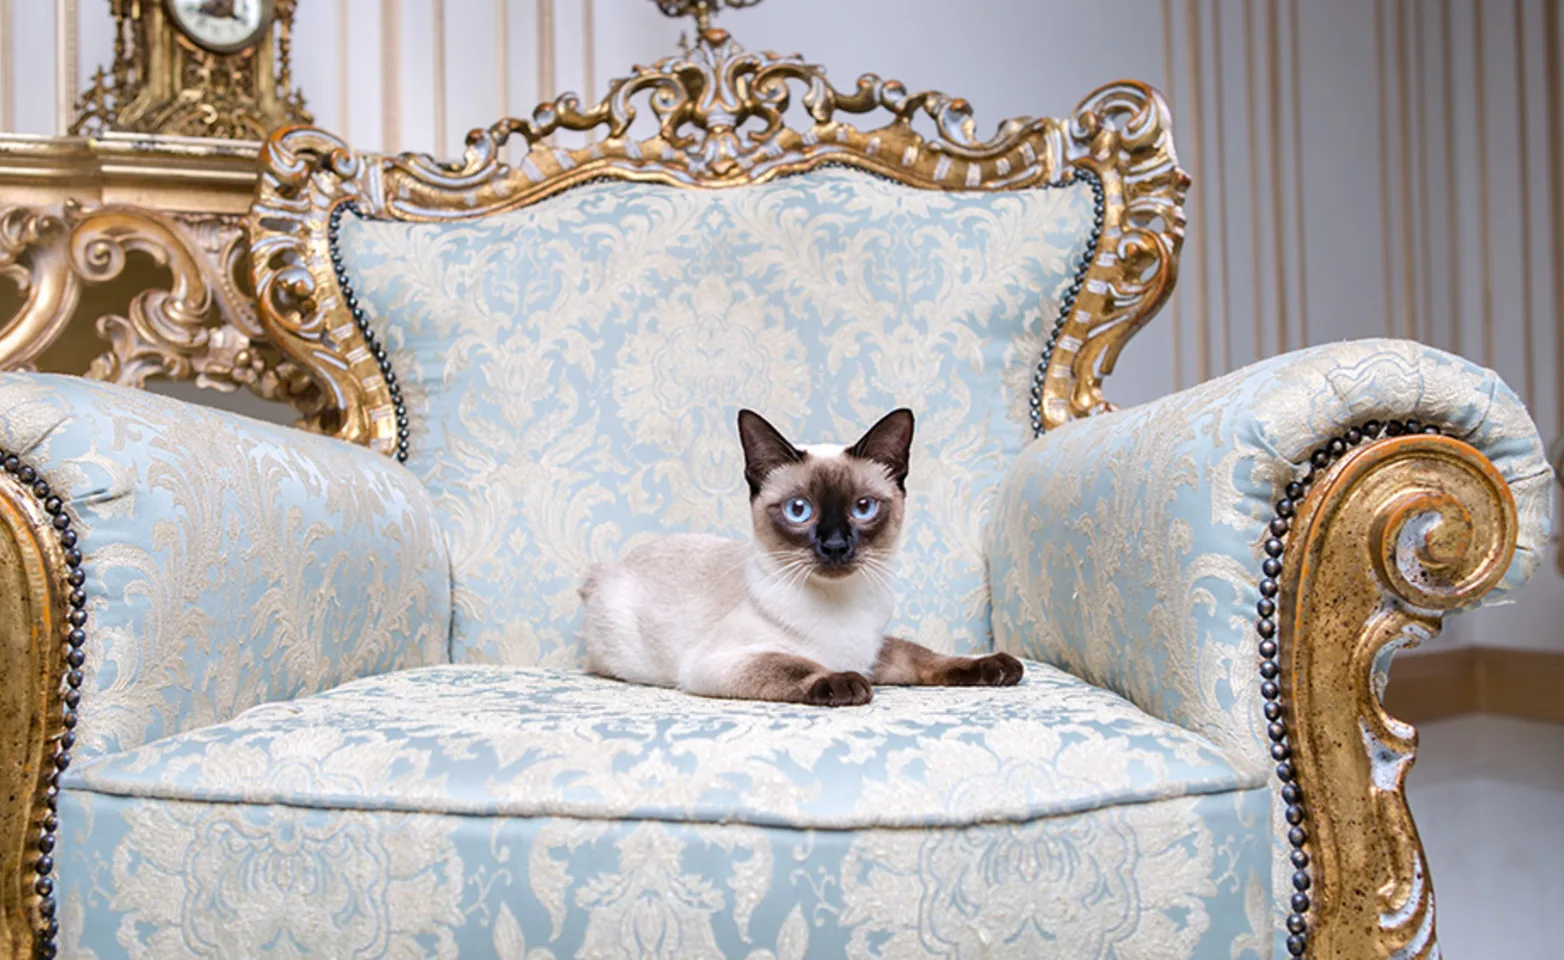 A cat sitting on an elegant chair